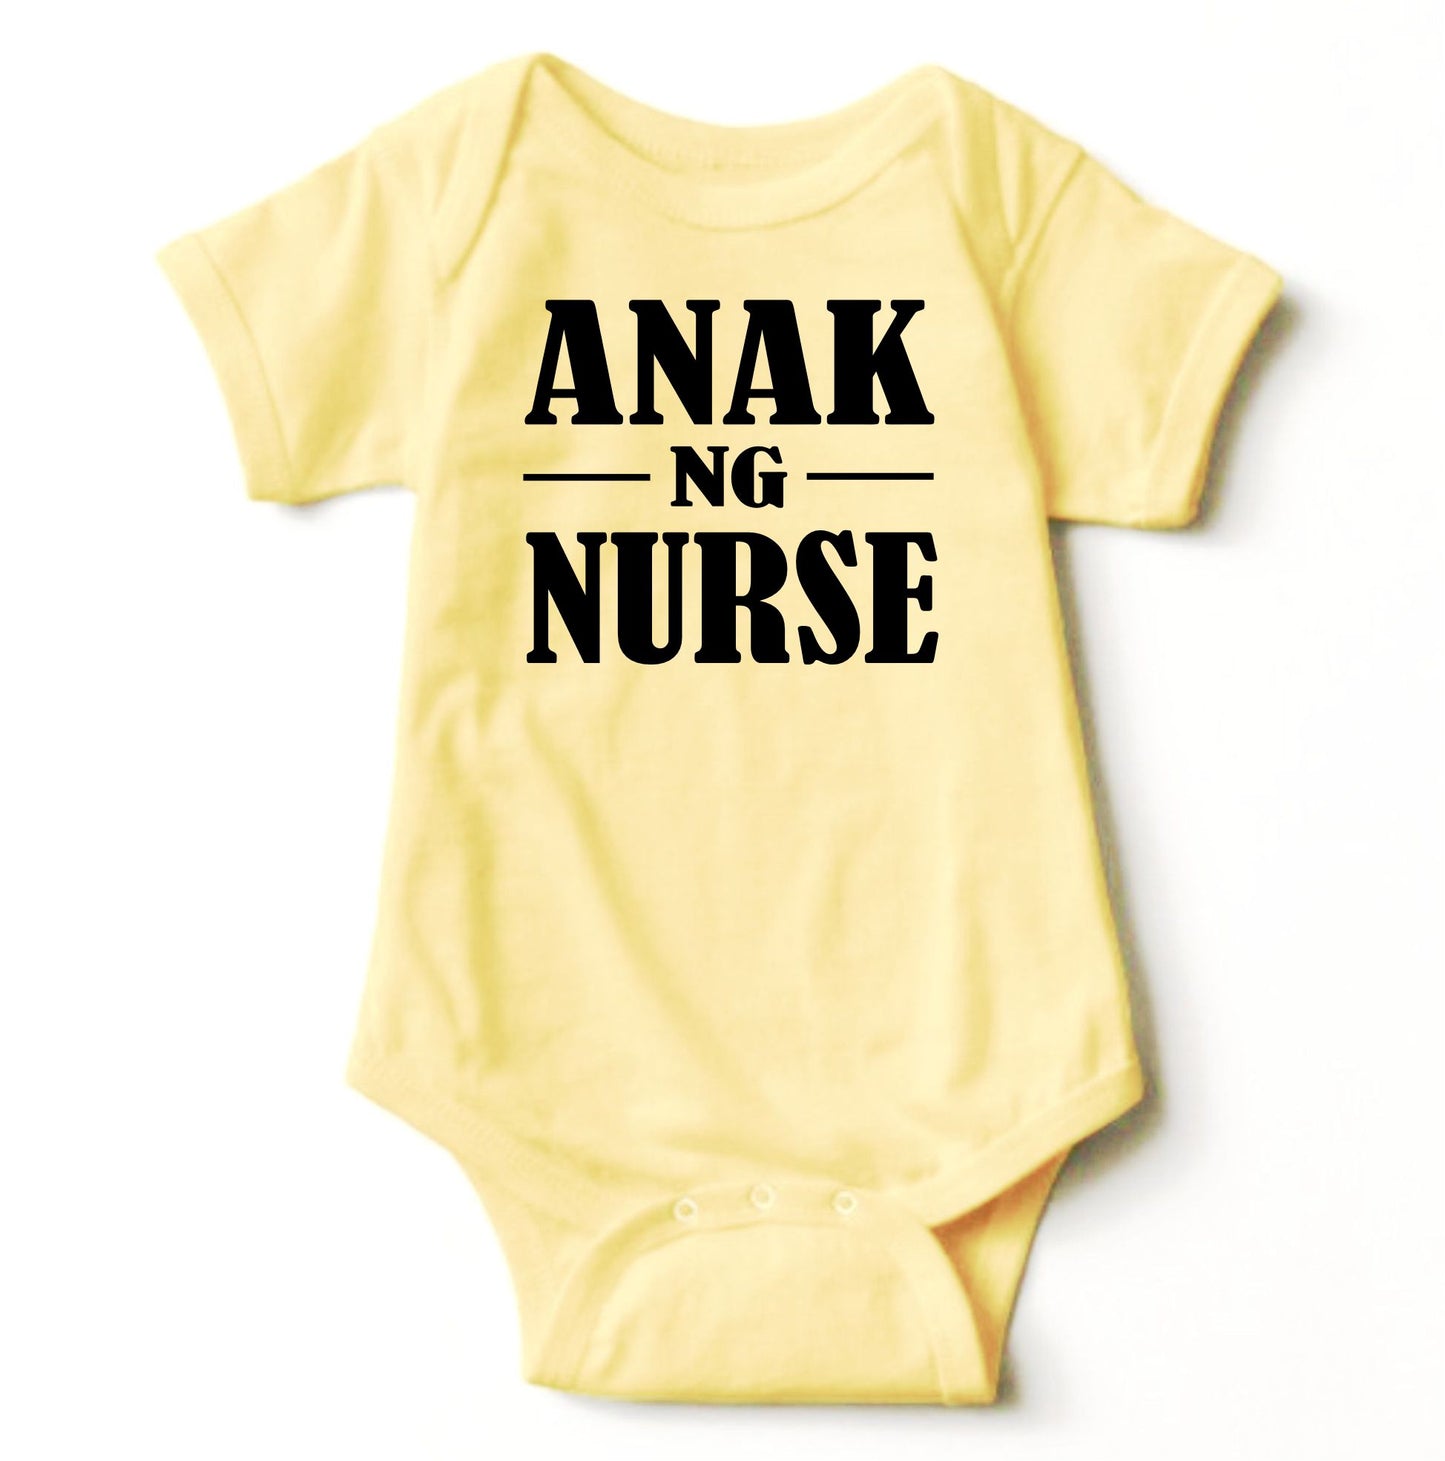 Baby Statement Onesies - Anak ng Nurse